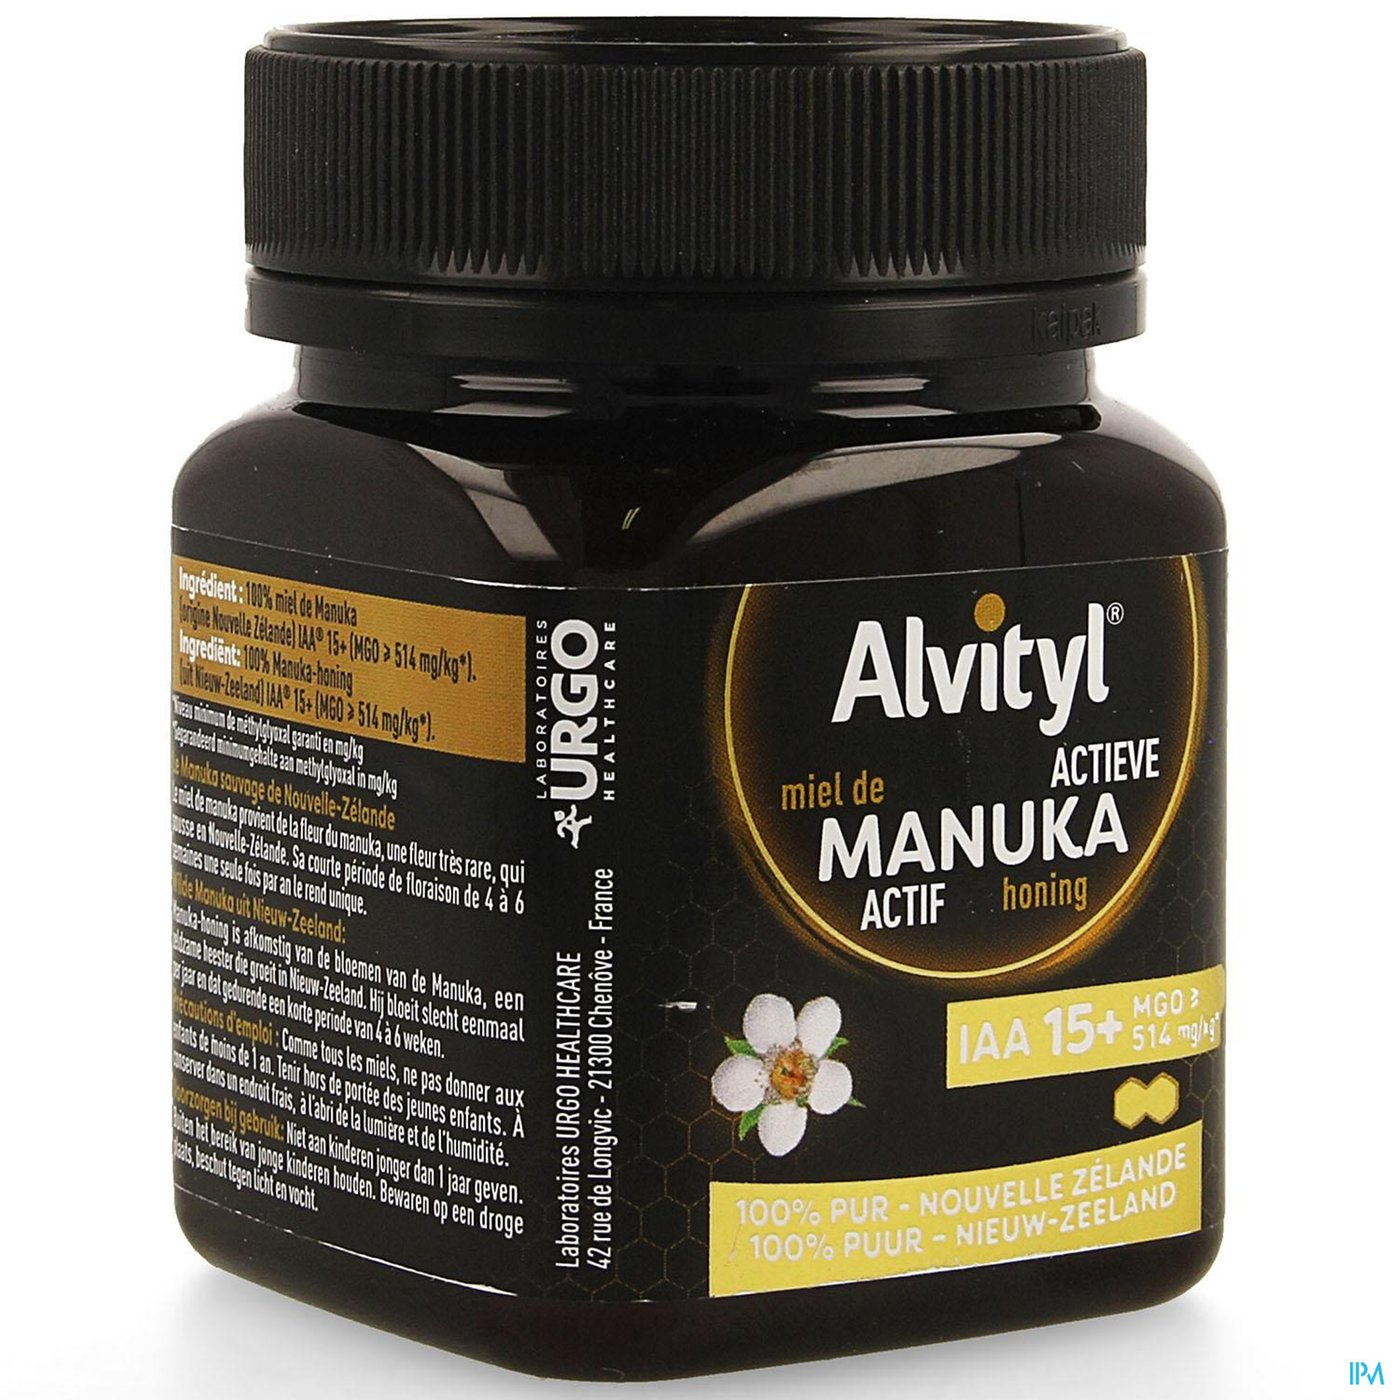 Alvityl Manuka Honey Iaa15+ 250g packshot